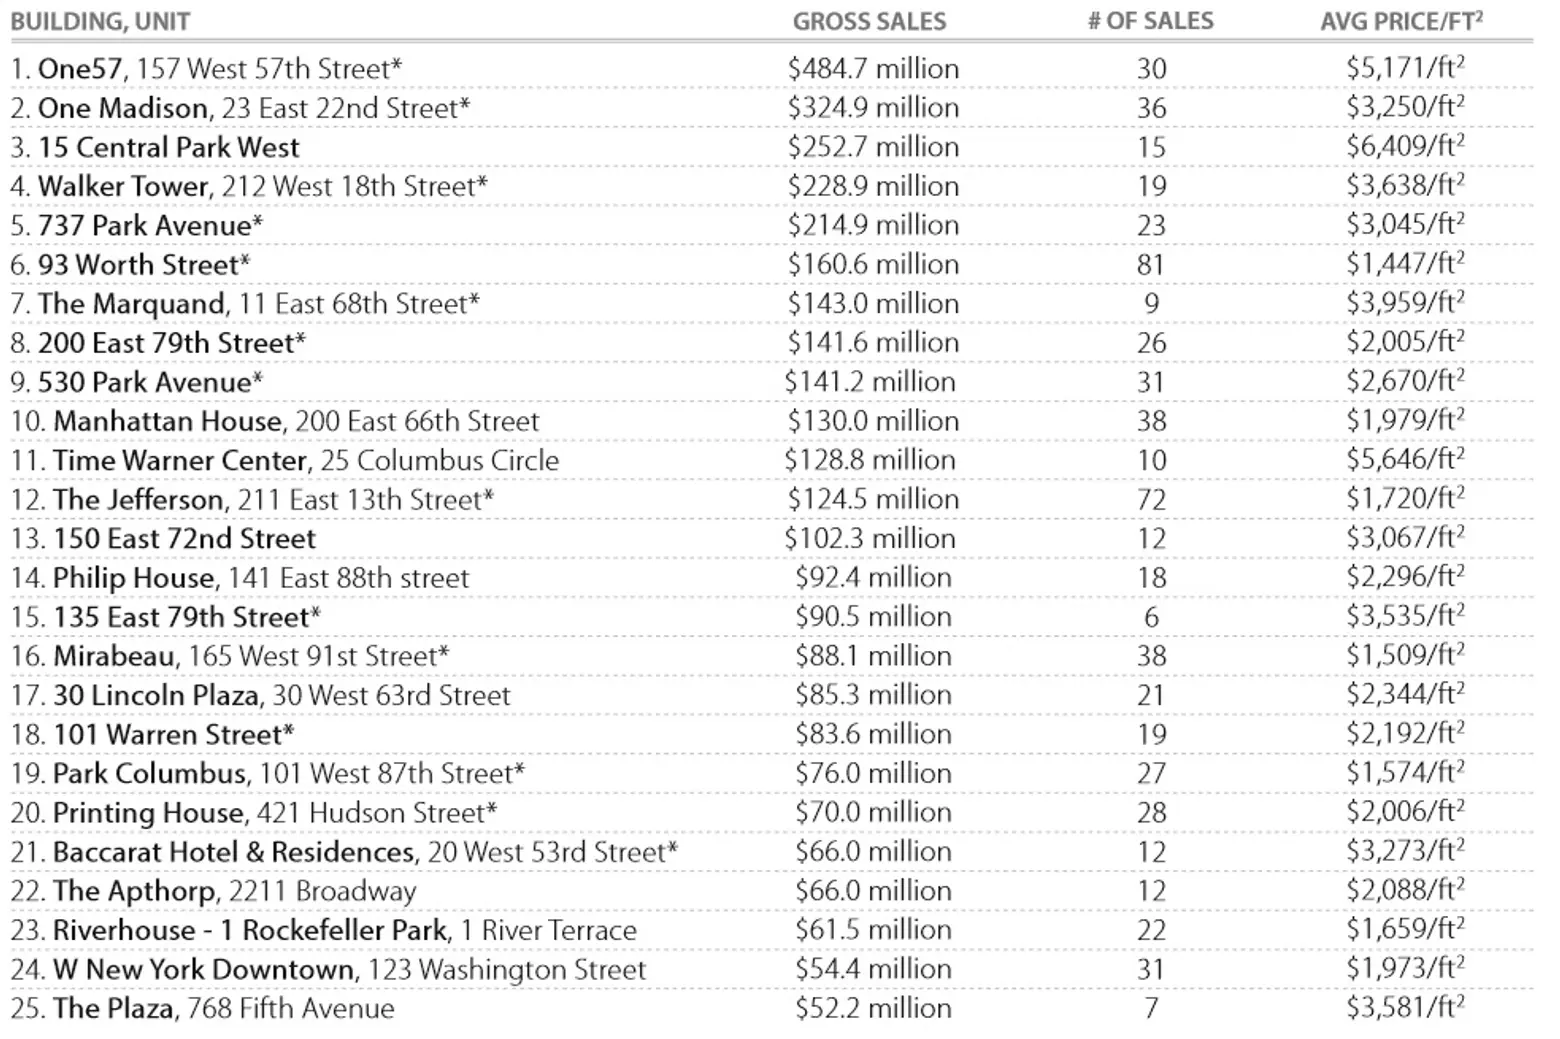 2014 top condo buildings by gross sales